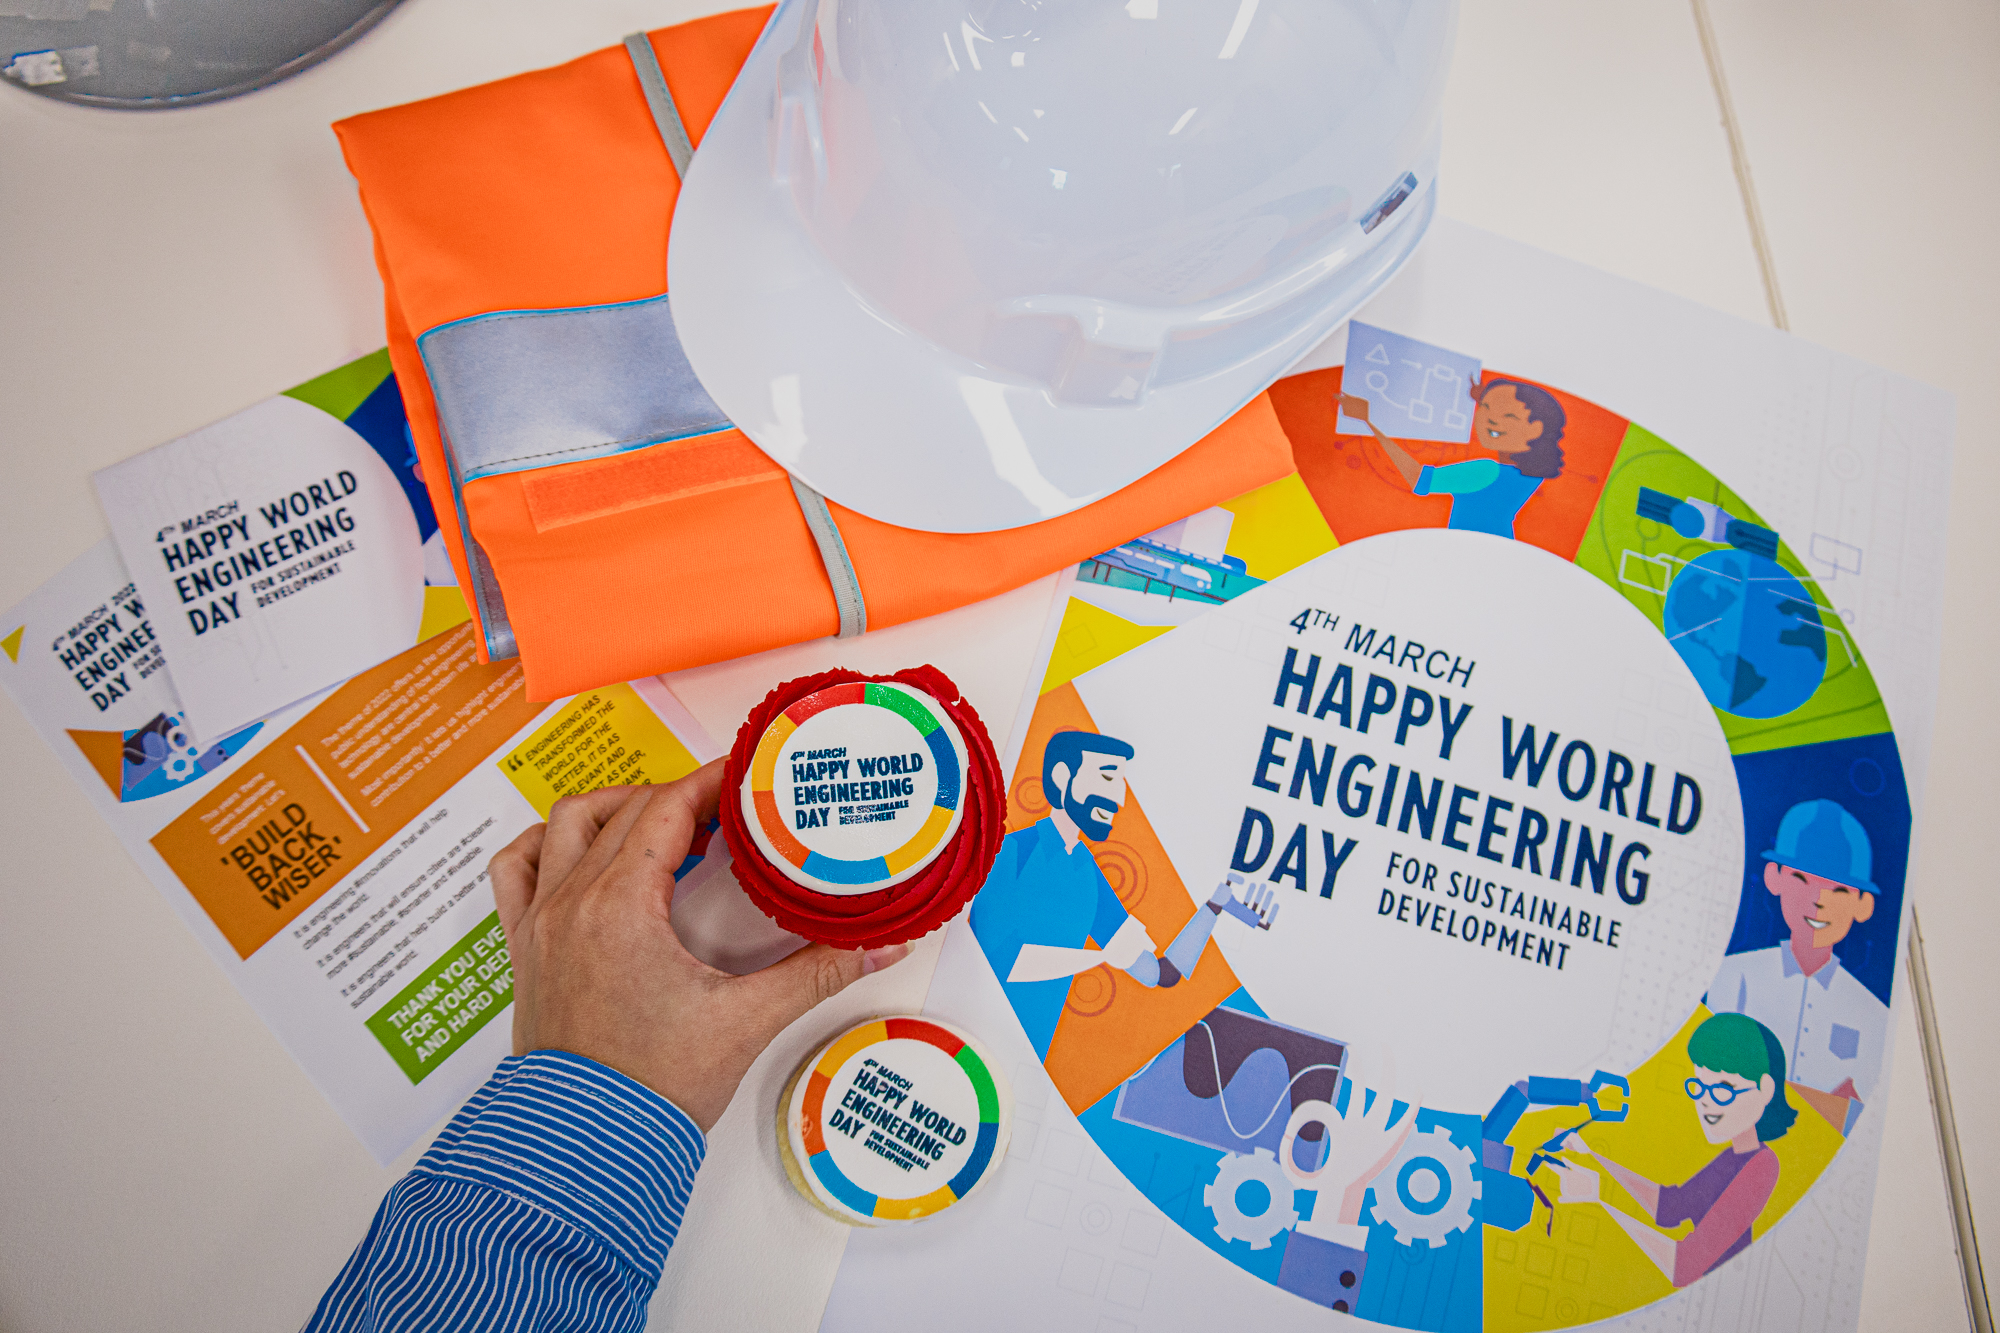 CJC Celebrates World Engineering Day